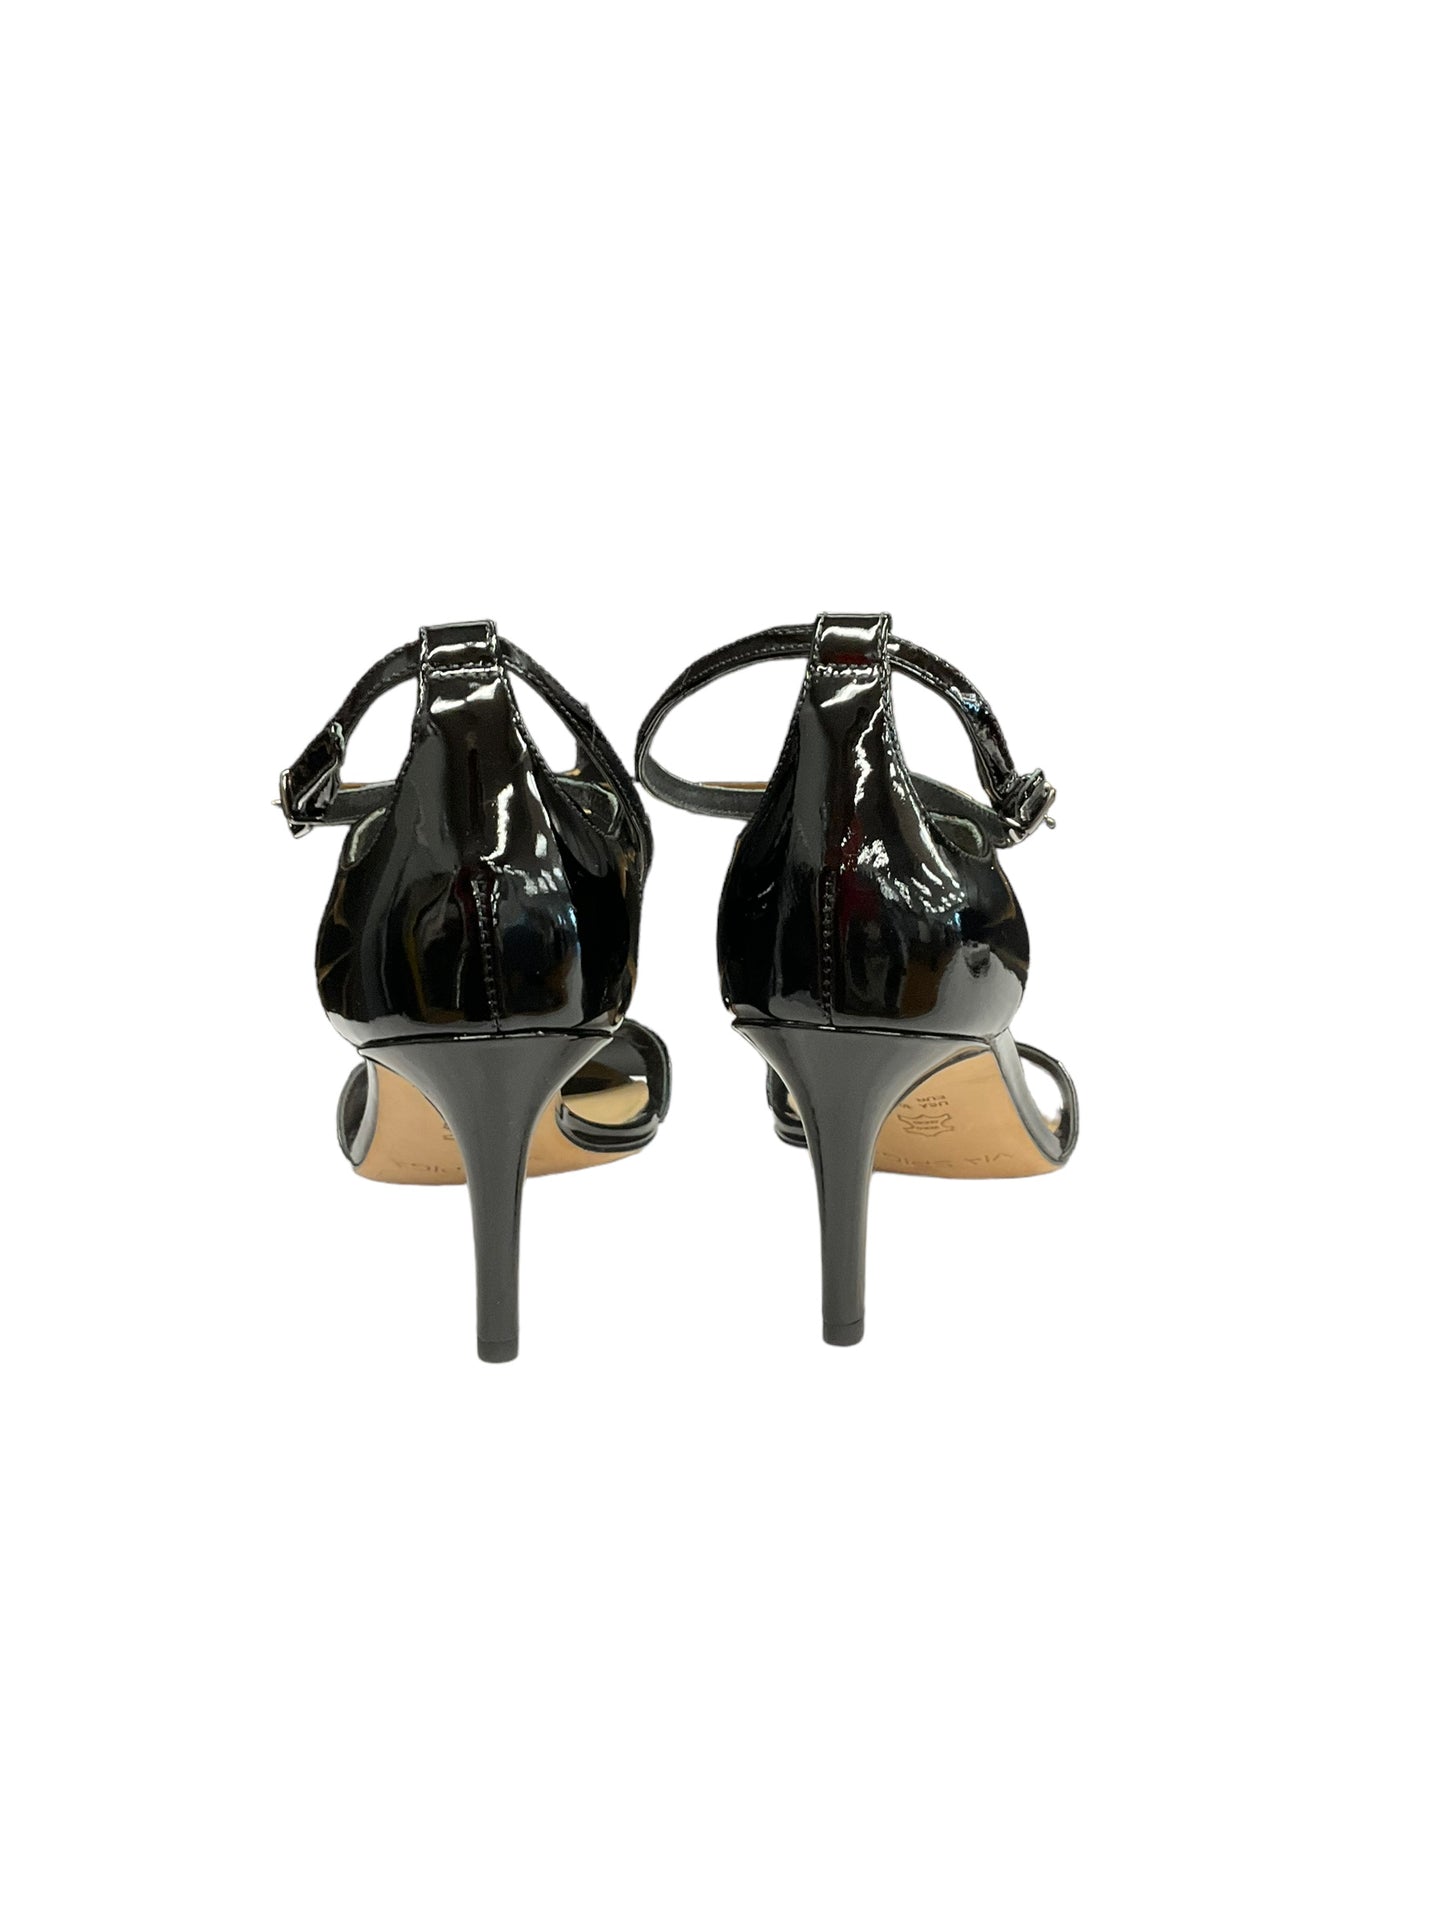 Shoes Heels Stiletto By Via Spiga  Size: 10